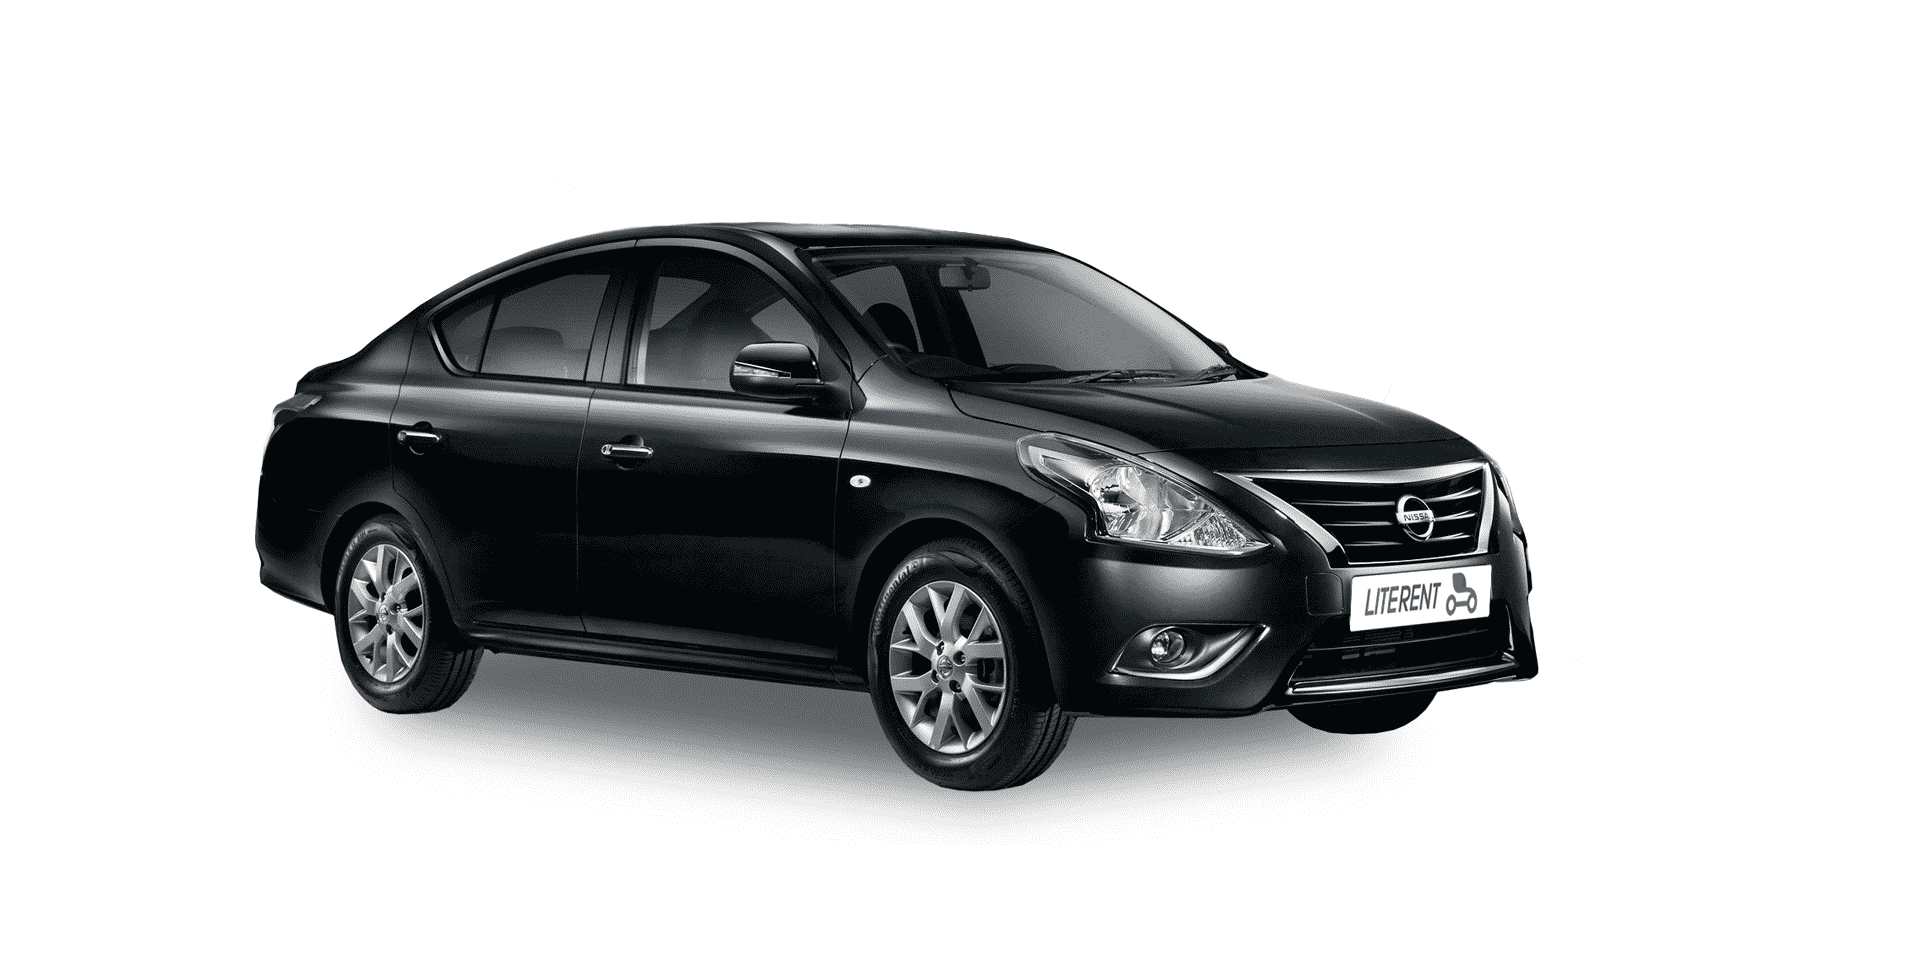 Nissan Almera 1.6 2014